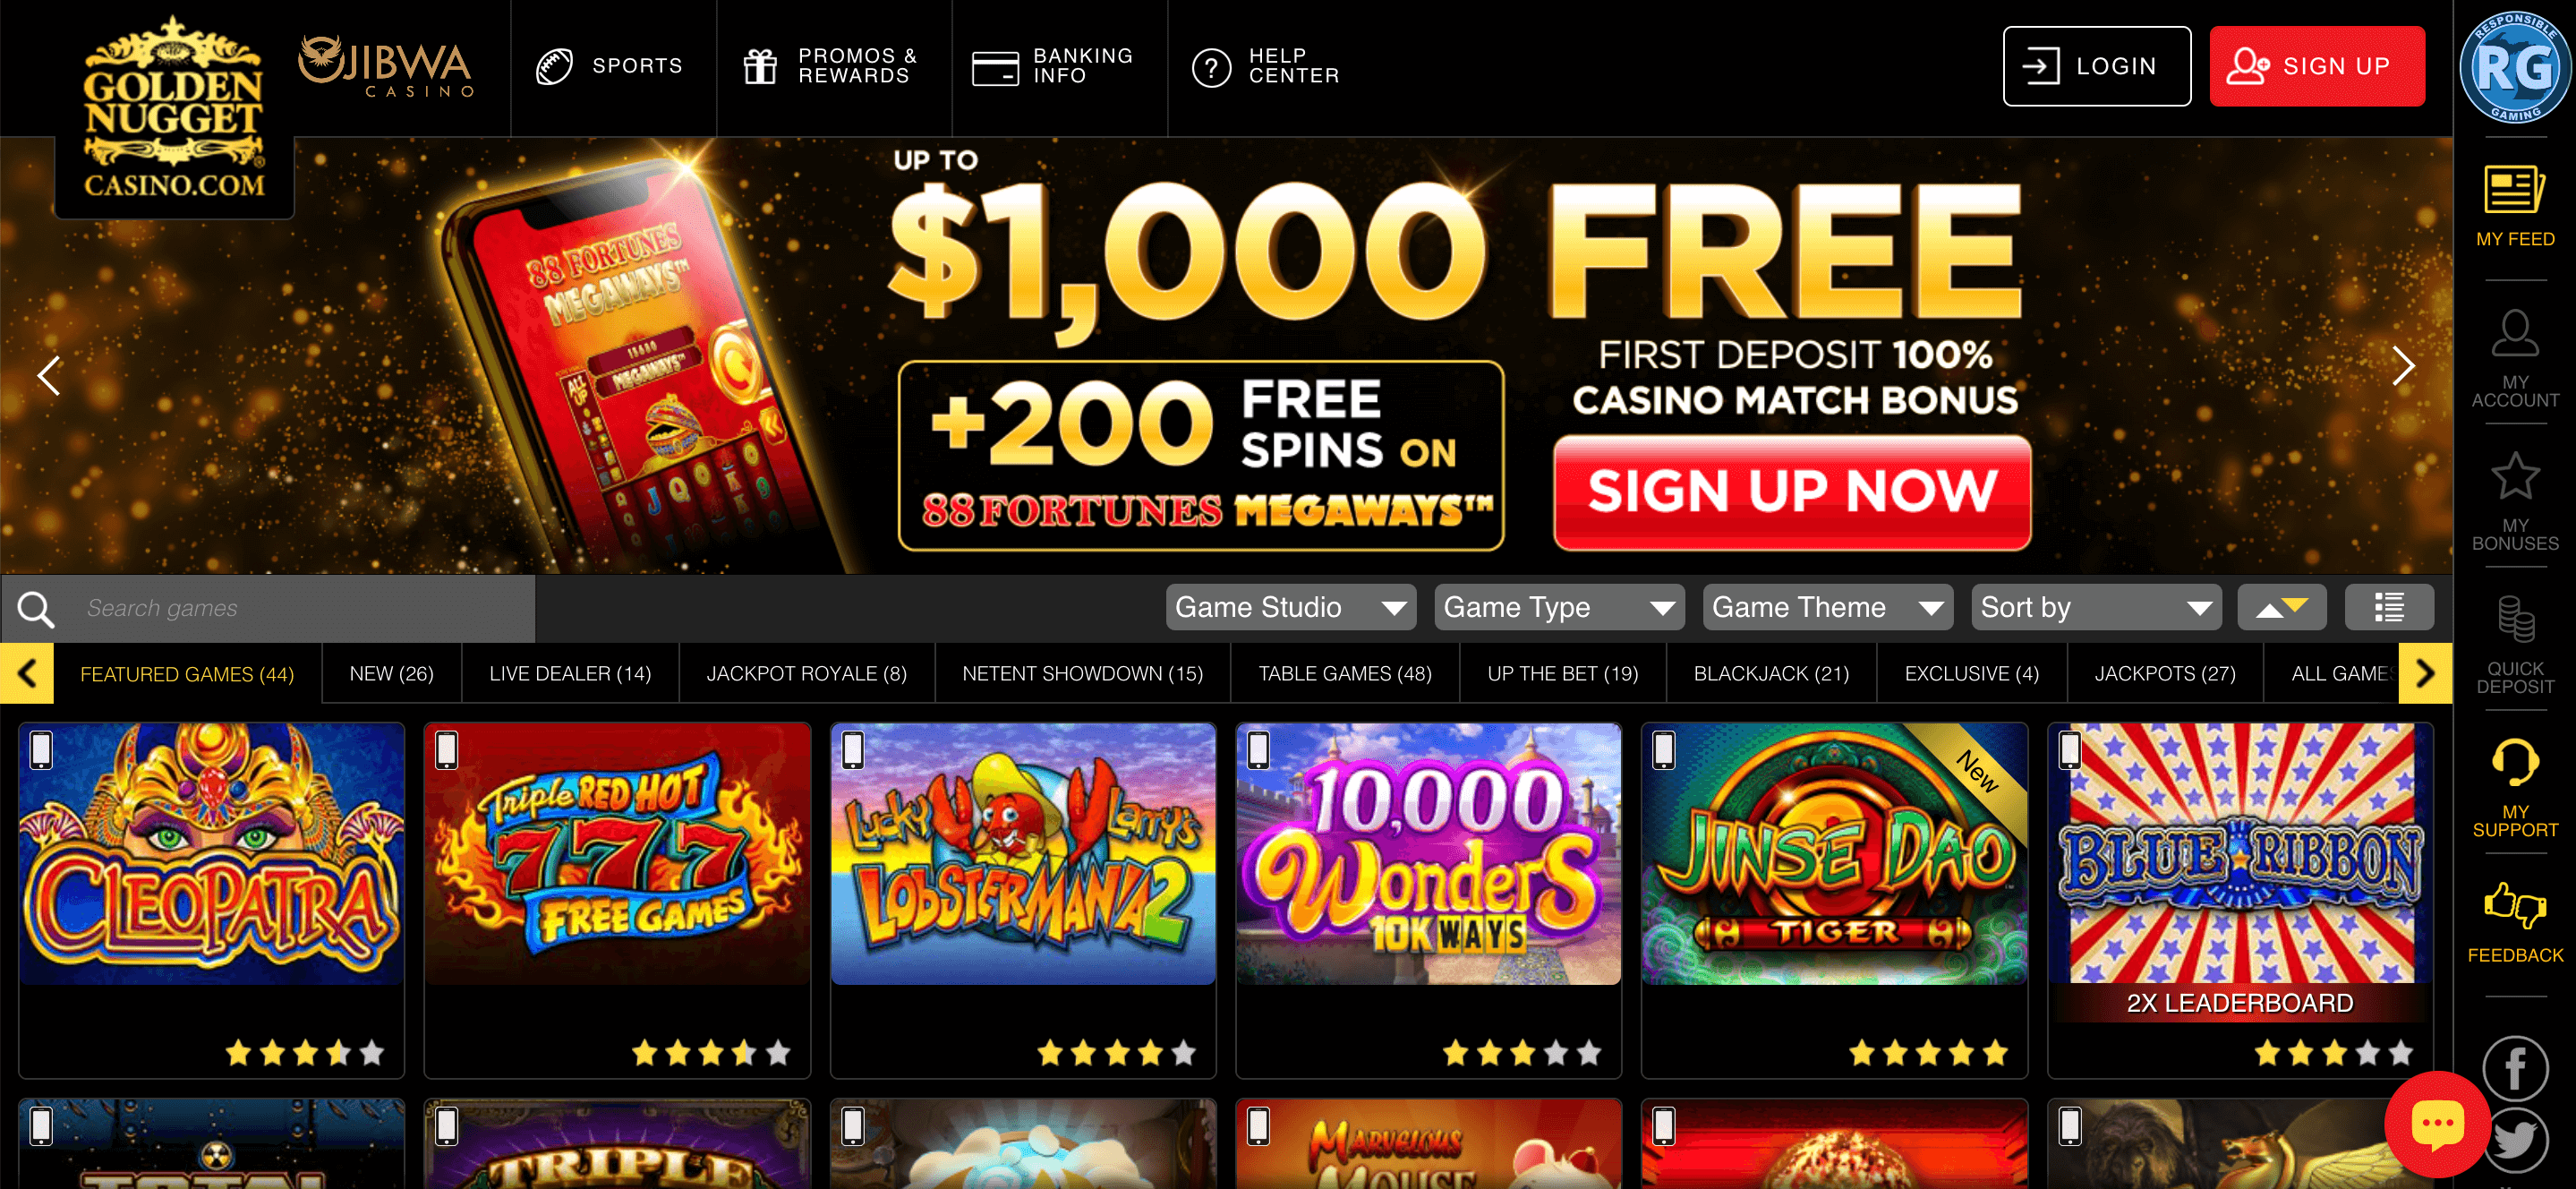 Golden Nugget Online Casino MI Home Page